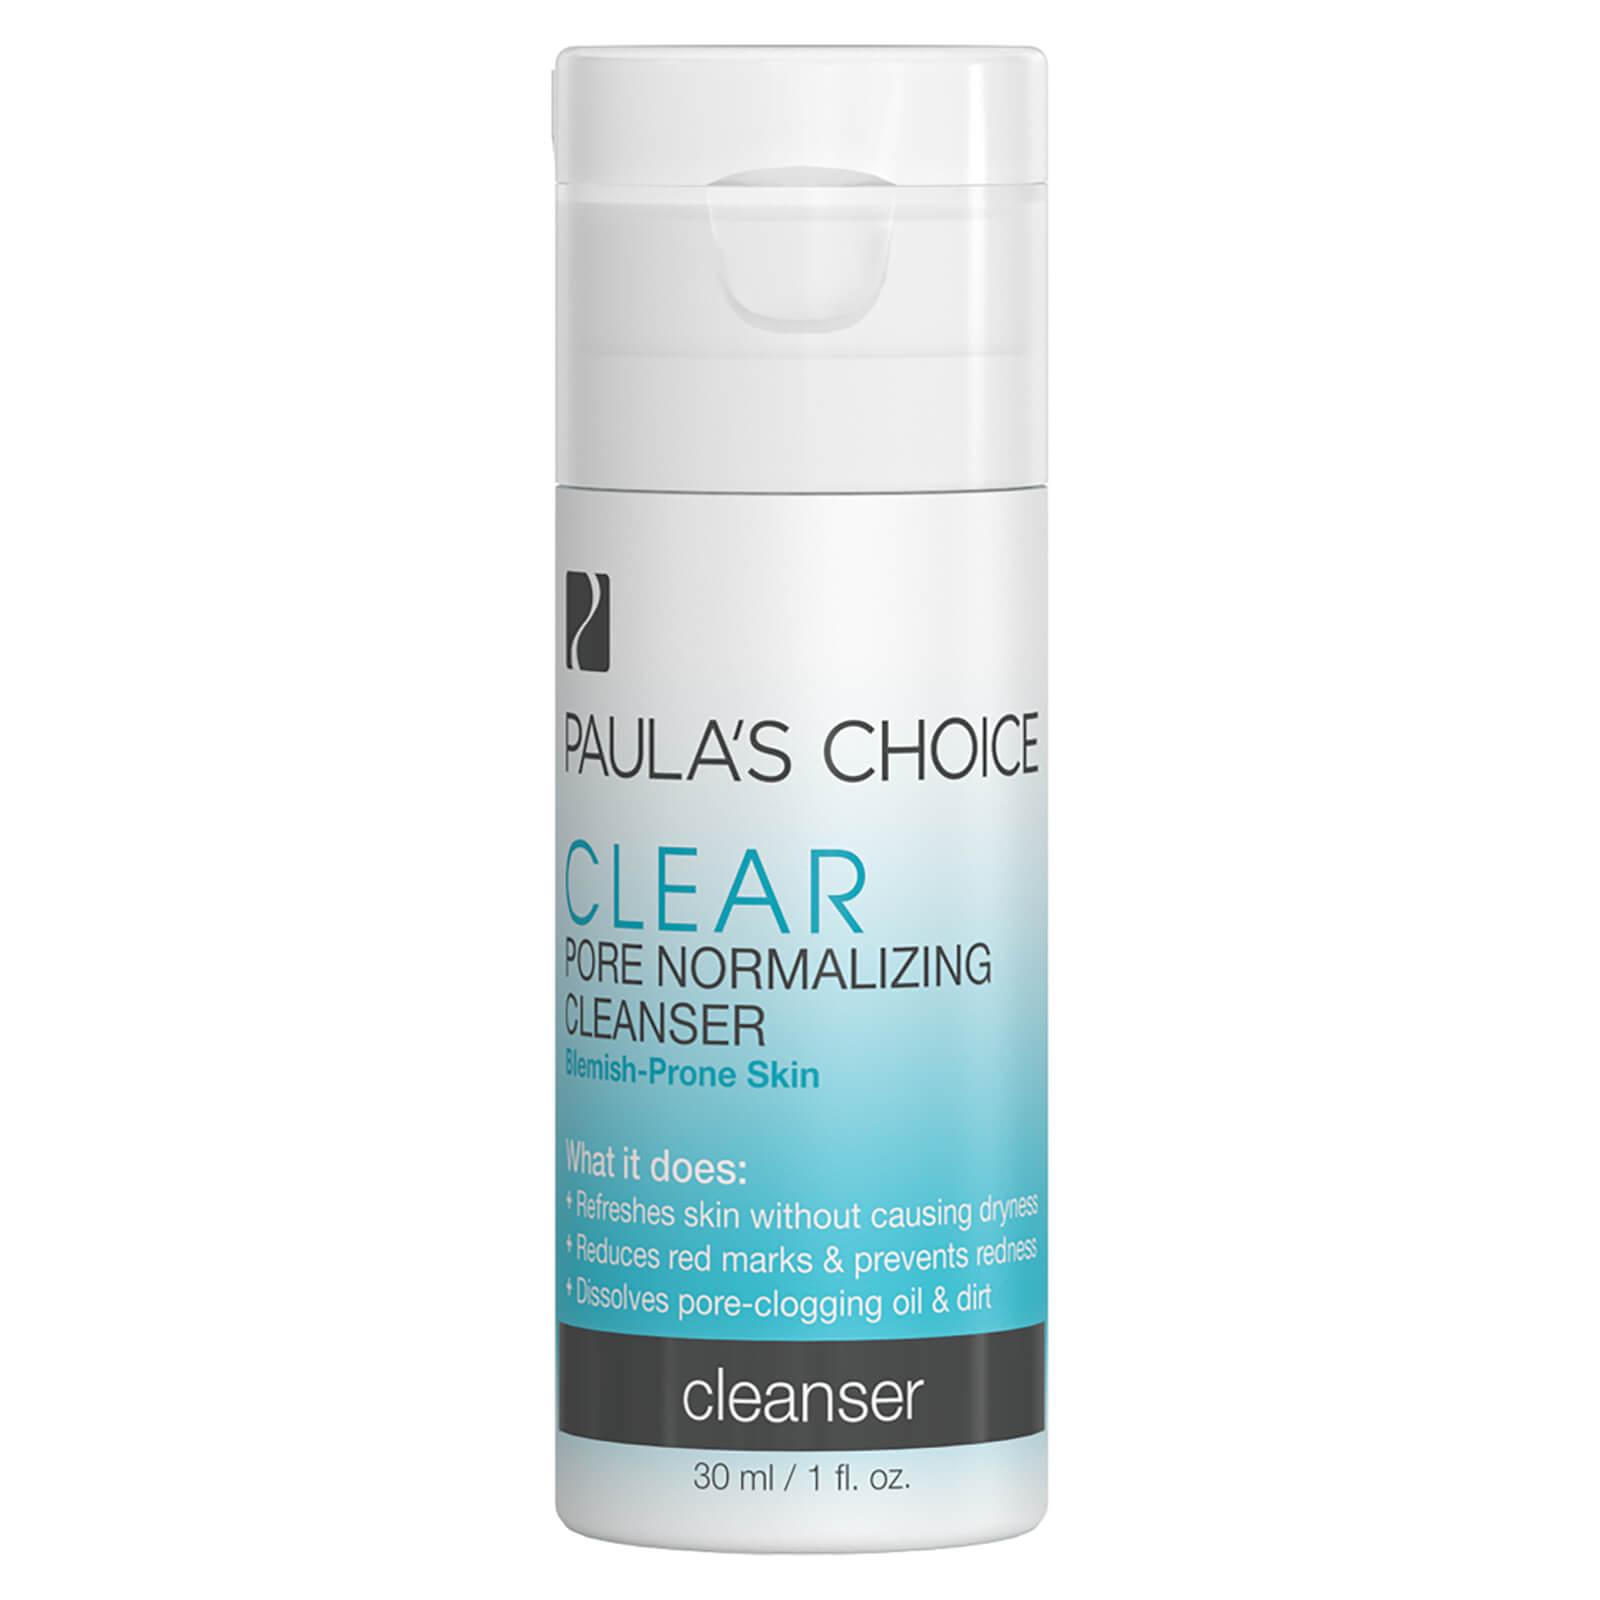 Clear Pores refreshing clean face Amino acid. Paula s choice pore purifier